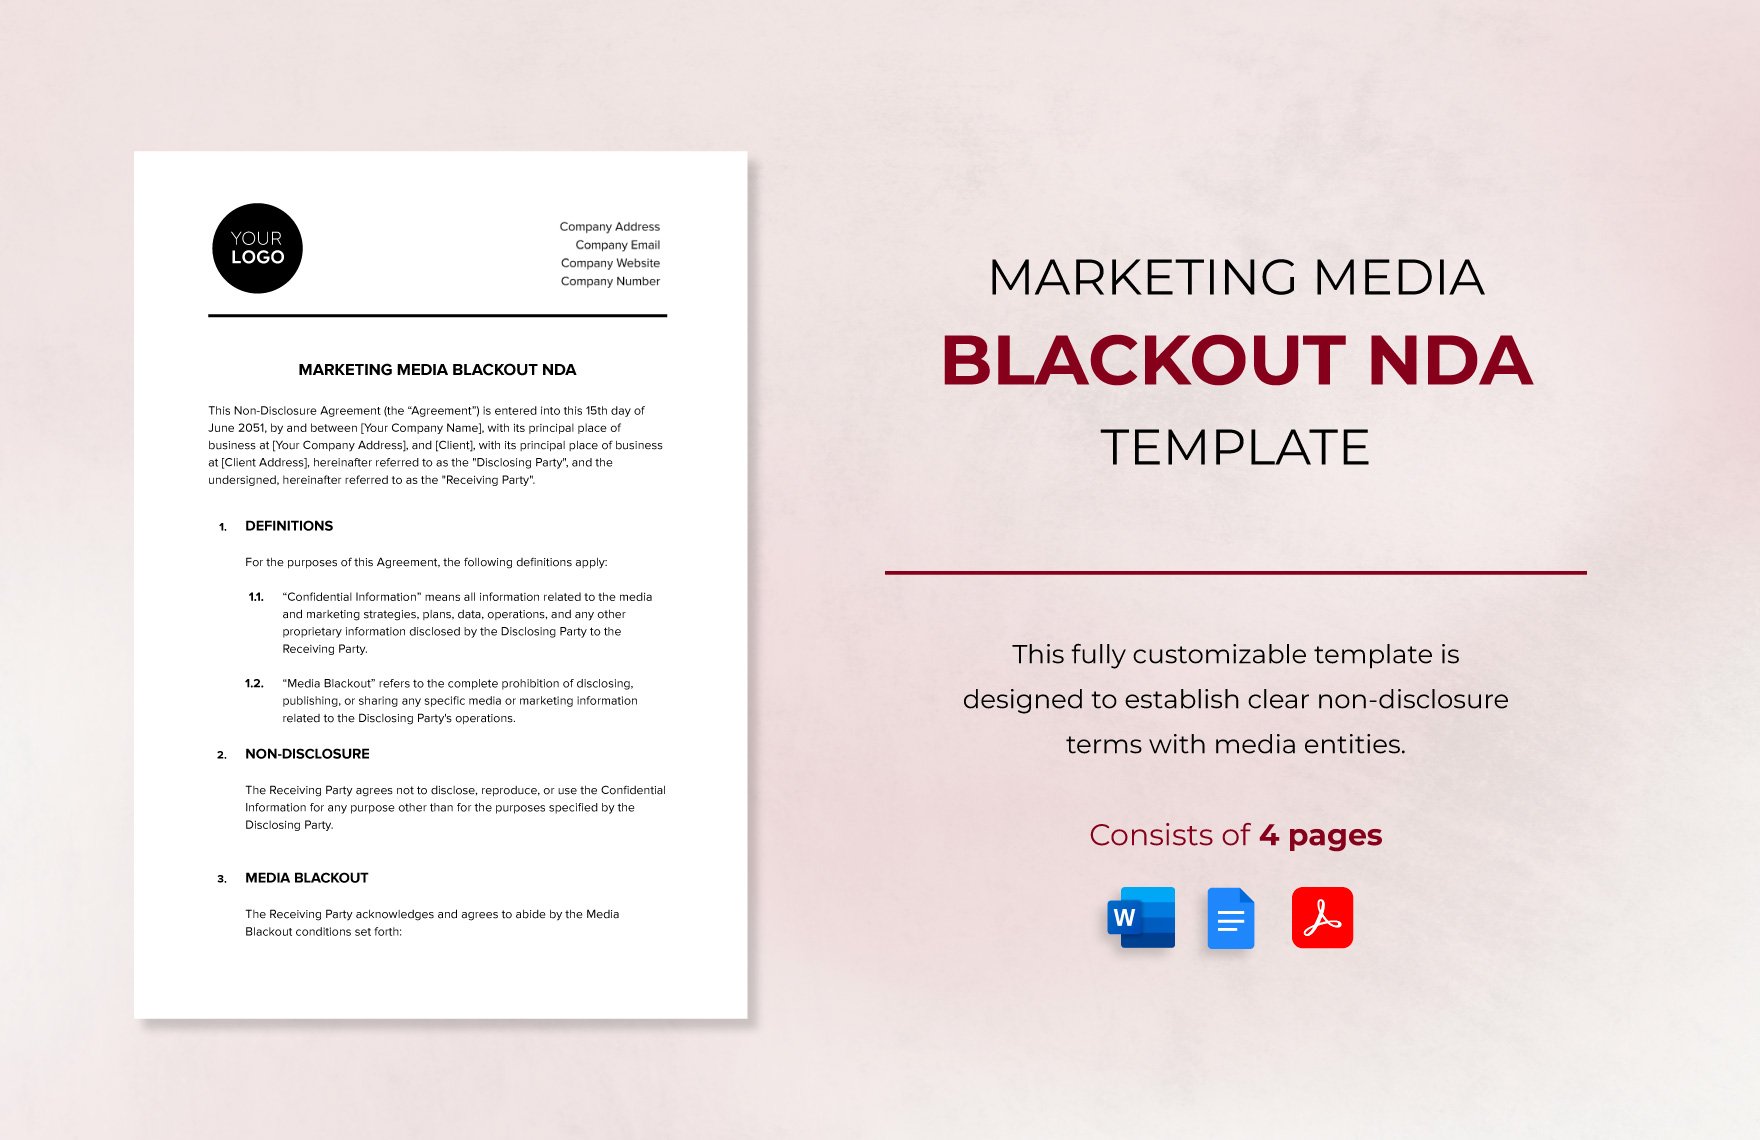 Marketing Media Blackout NDA Template